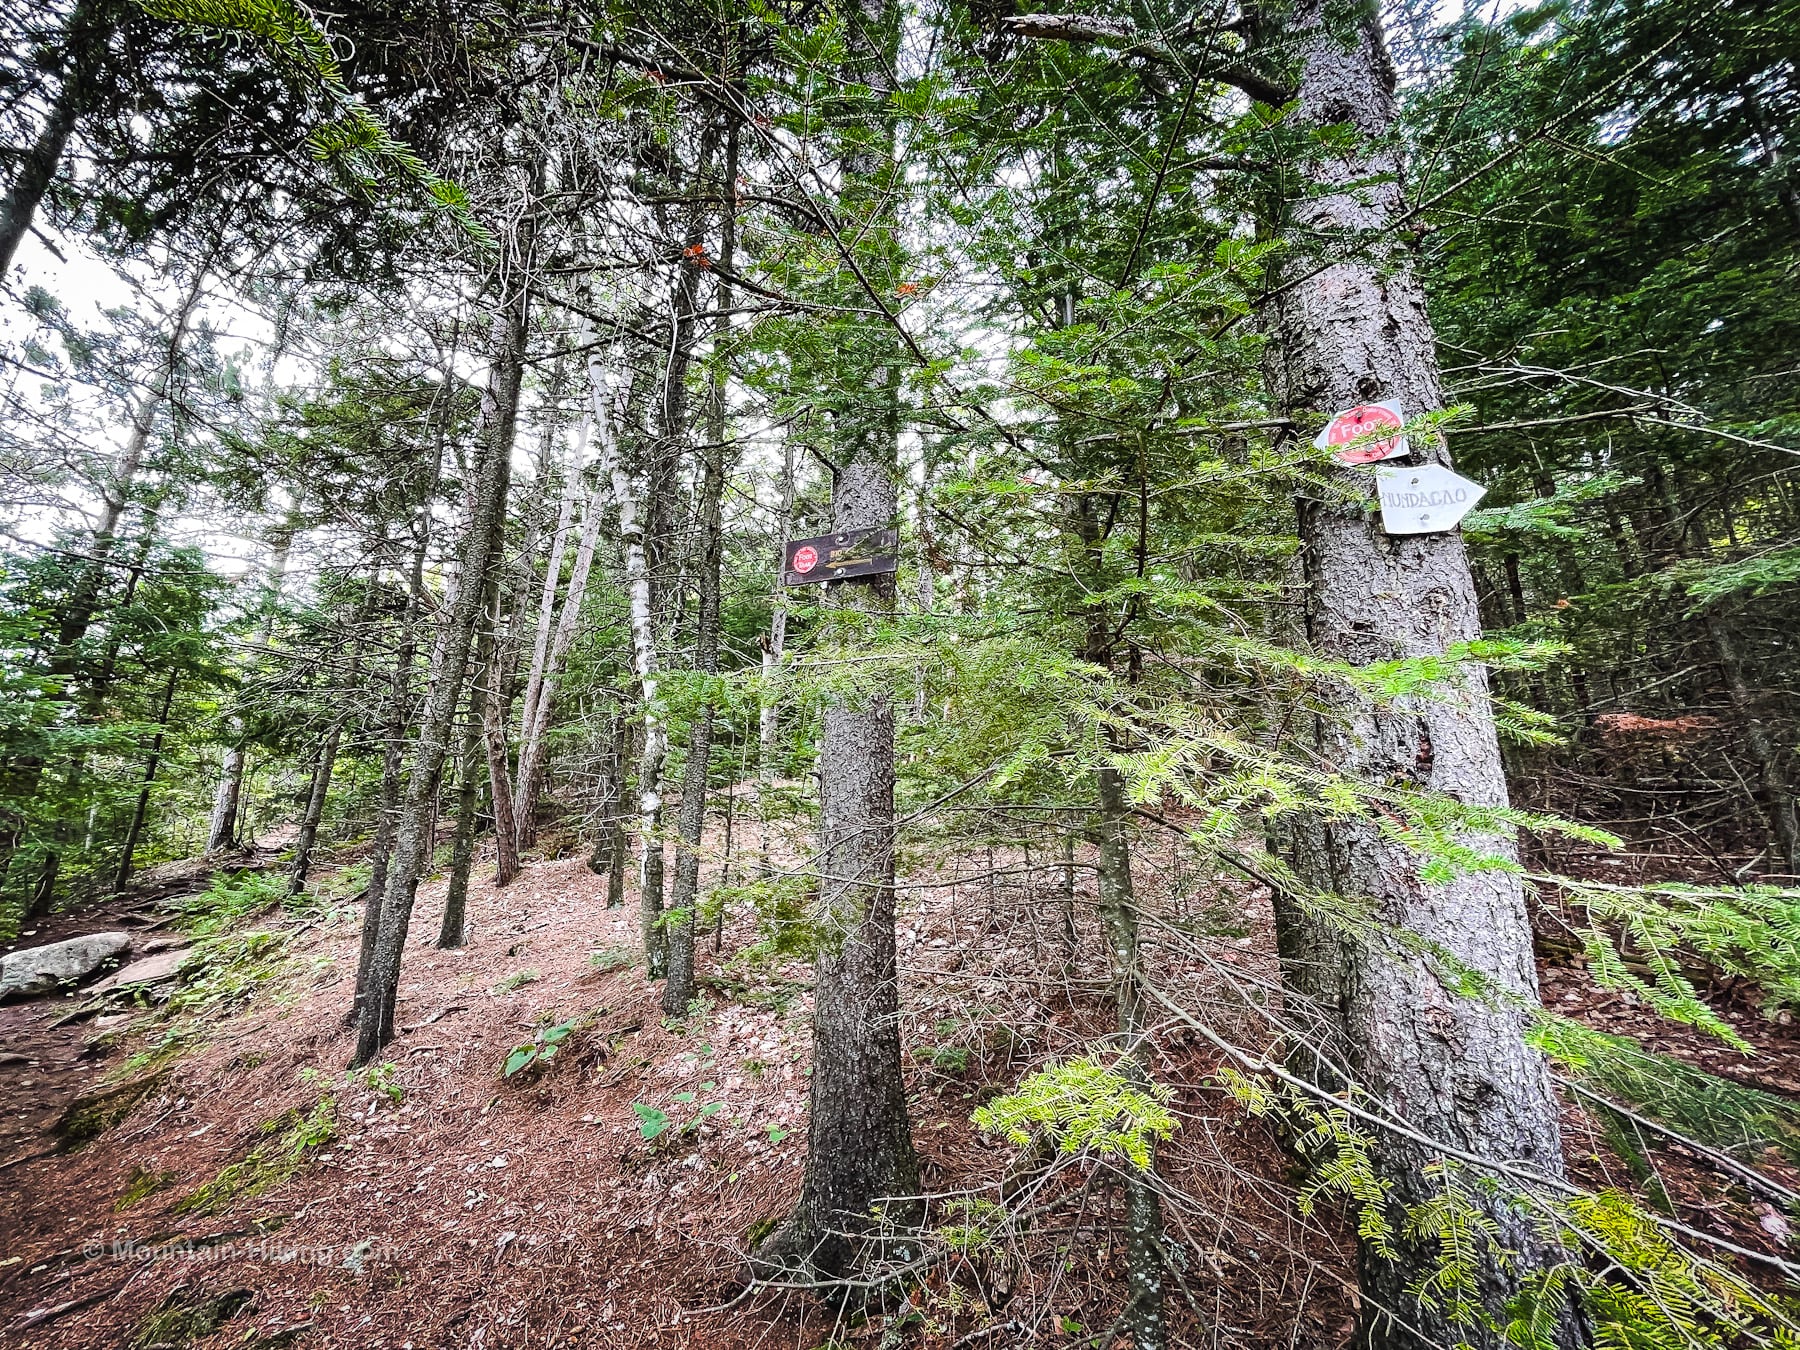 nun-da-ga-o loop trail signs affixed to tree